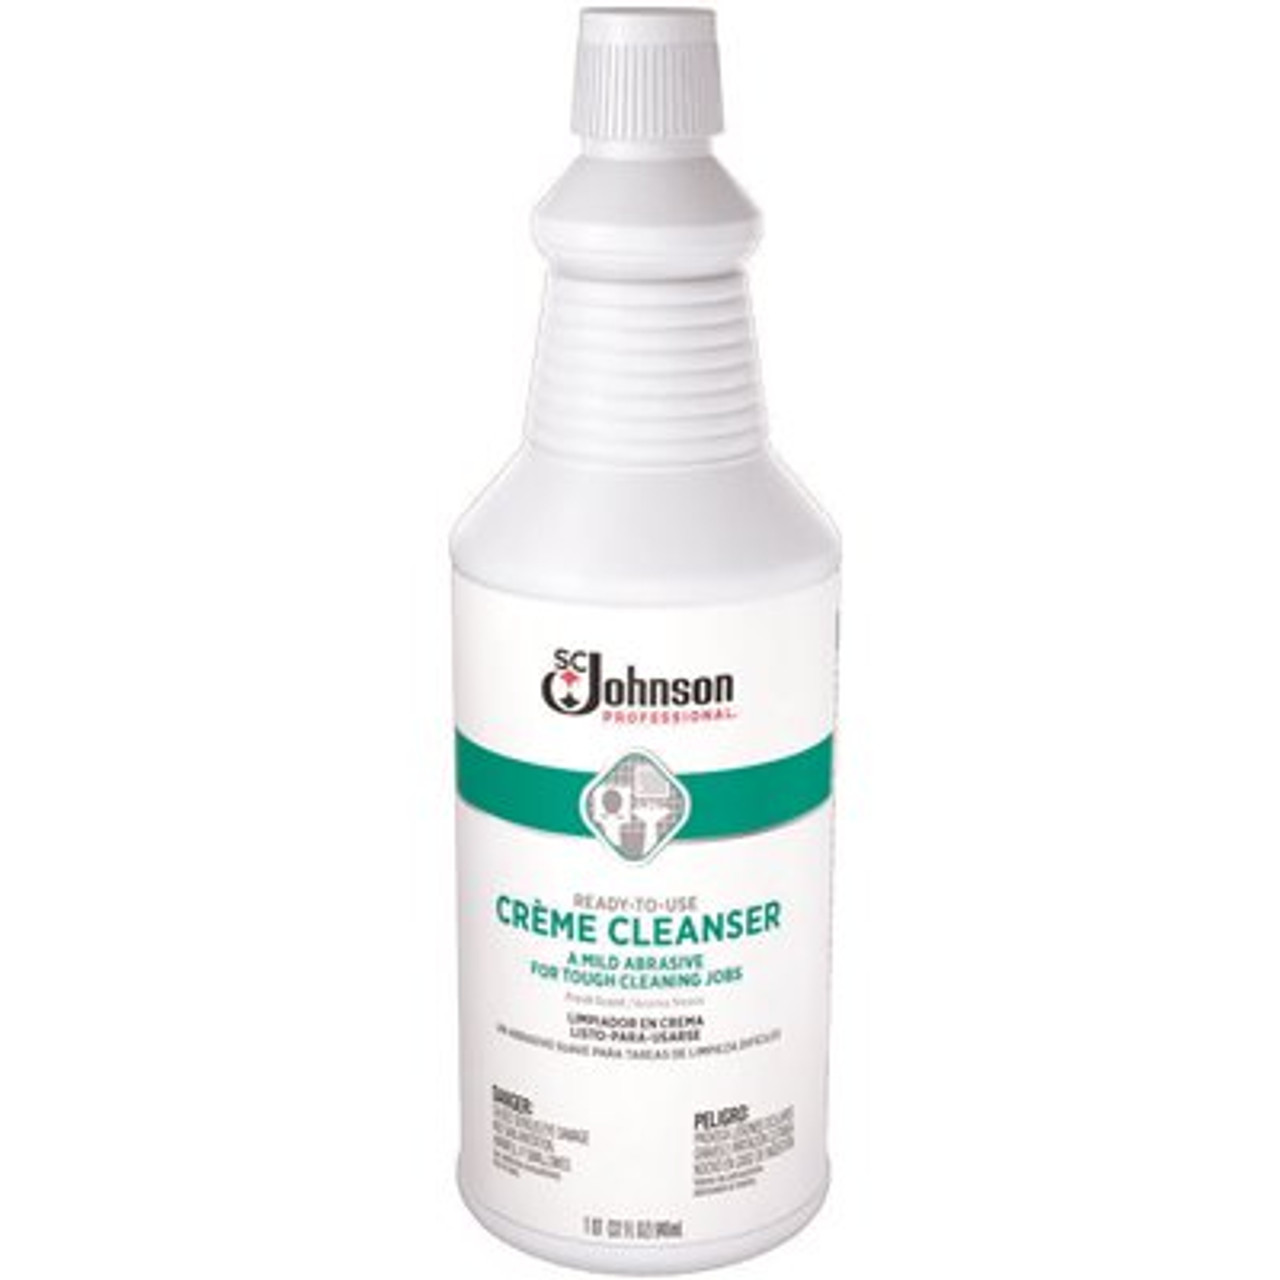 SC Johnson Professional Ready-to-Use Creme Cleanser 1 Qt. bottle, 12/case